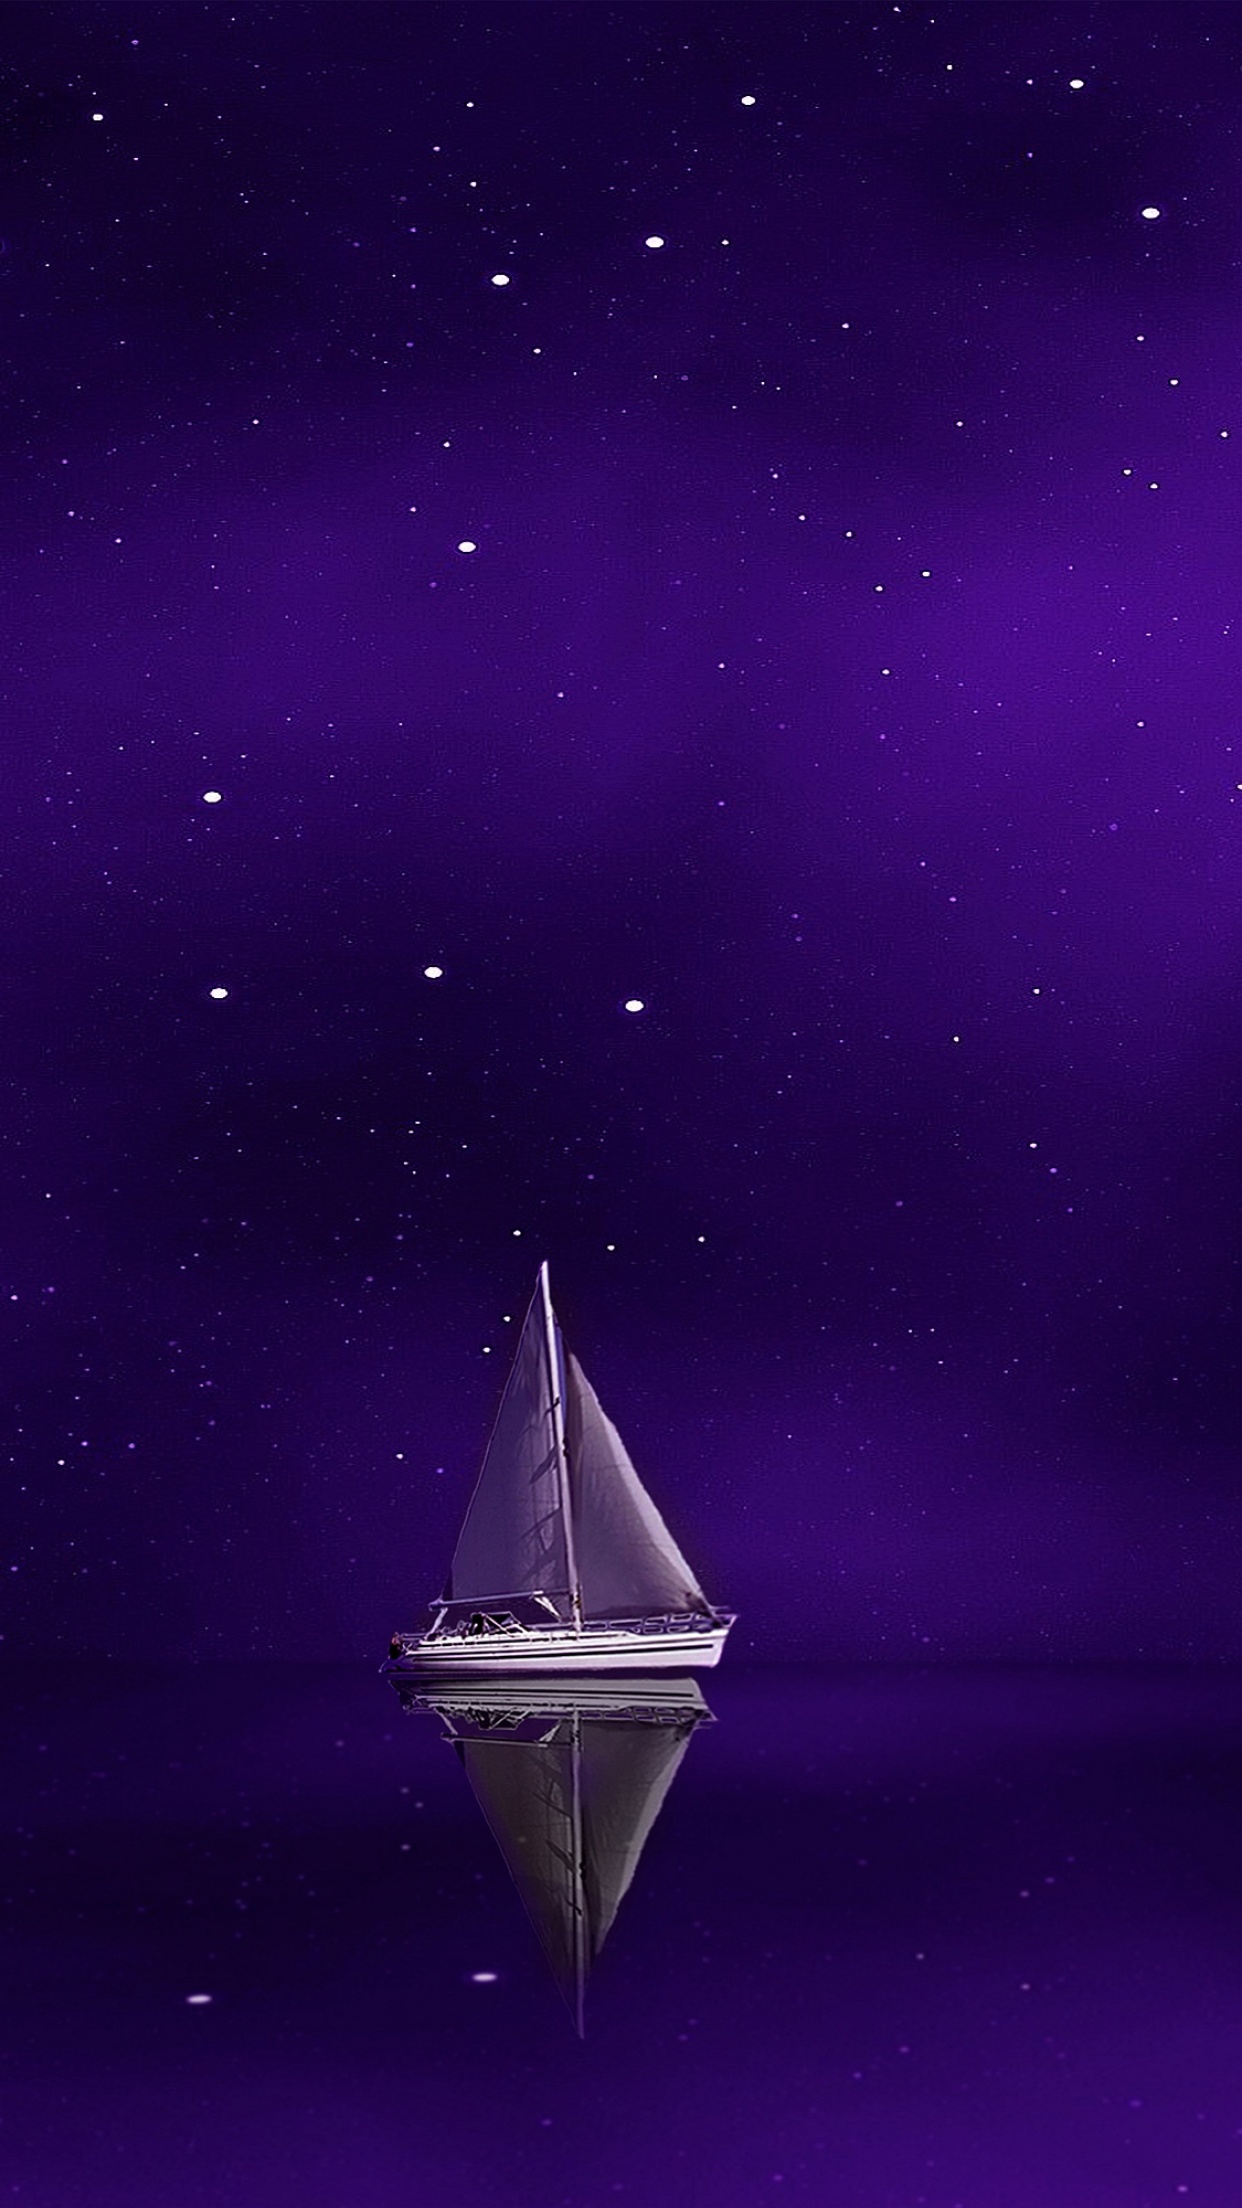 Sailing boat 4K Wallpaper, Ship, Purple background, Stars 